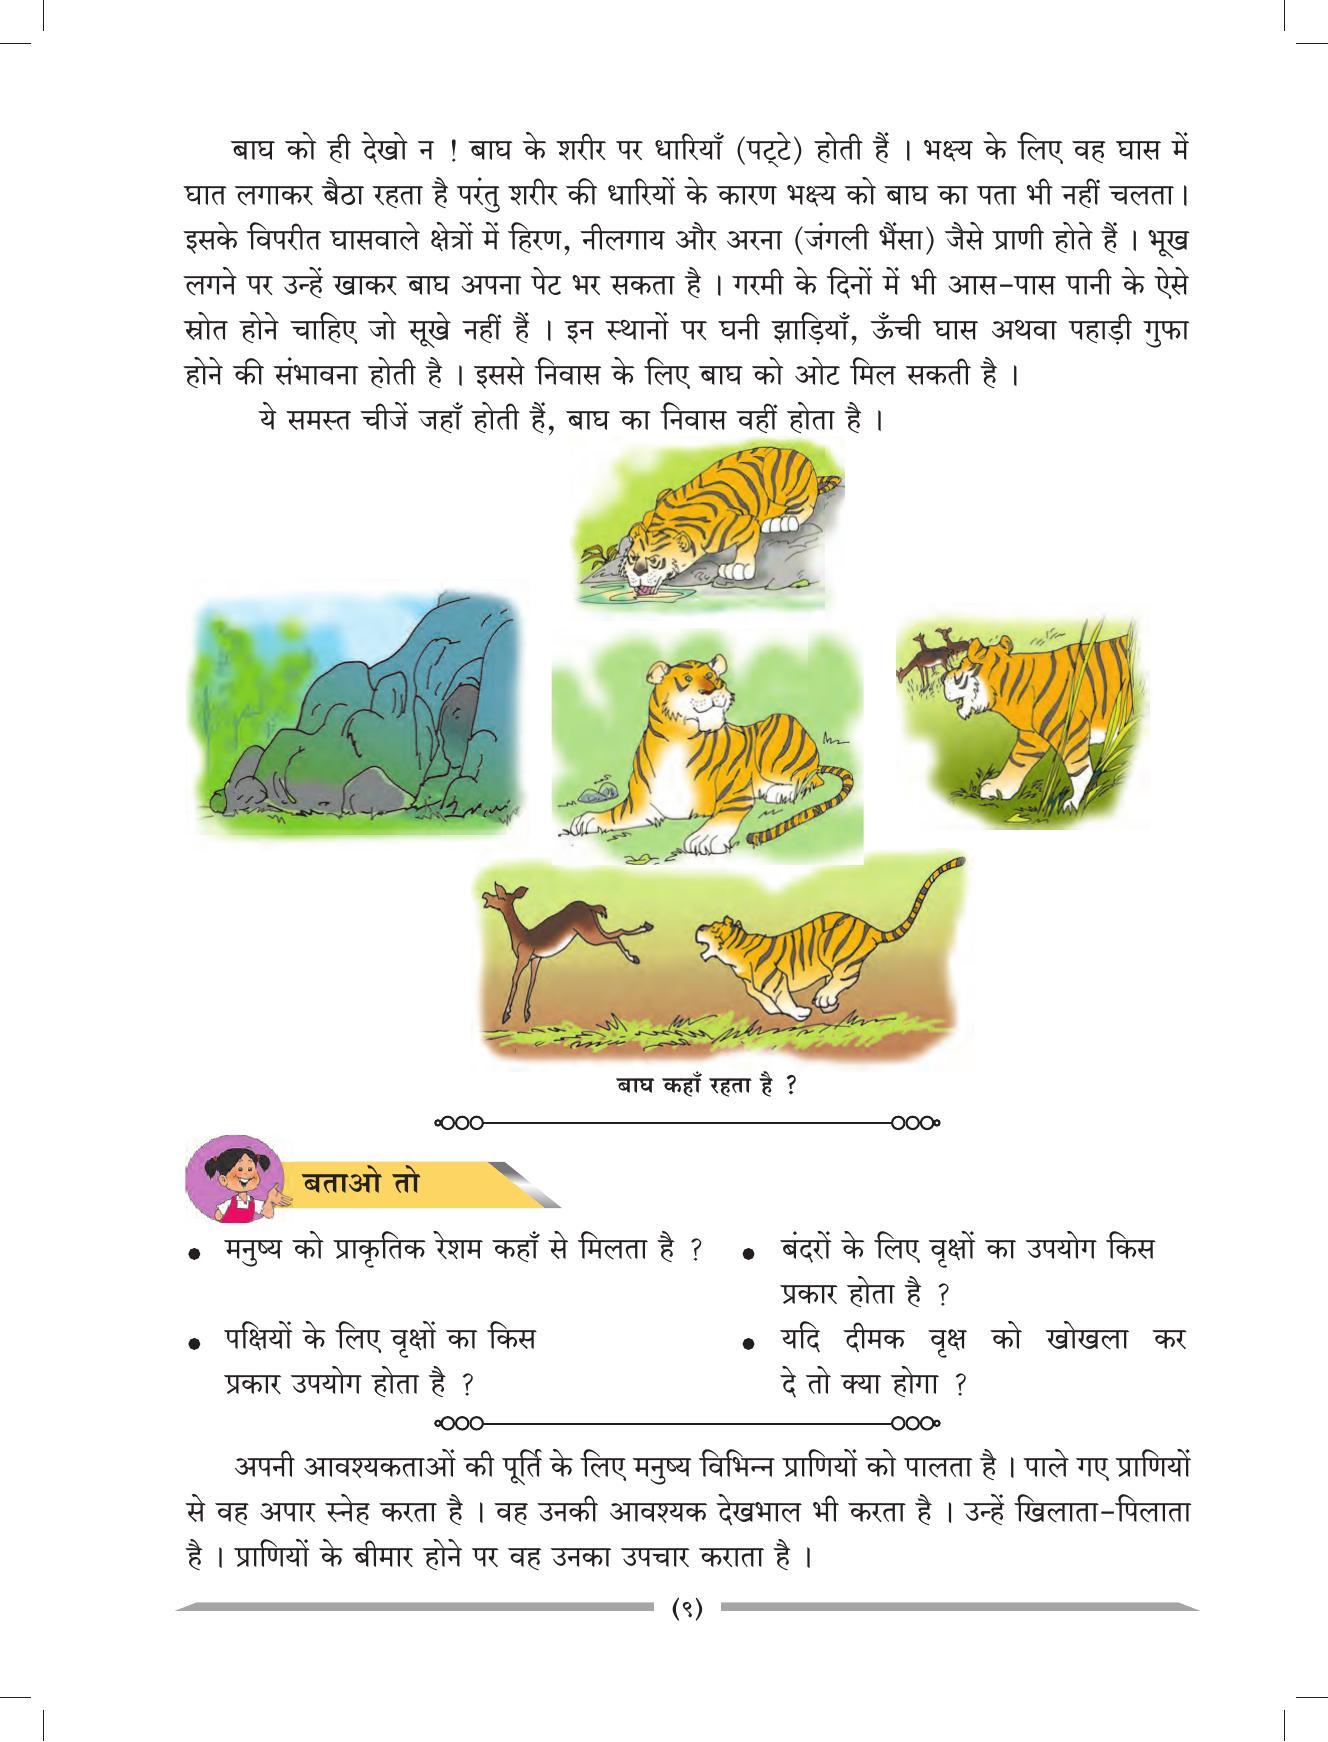 Maharashtra Board Class 4 EVS 1 (Hindi Medium) Textbook - Page 19